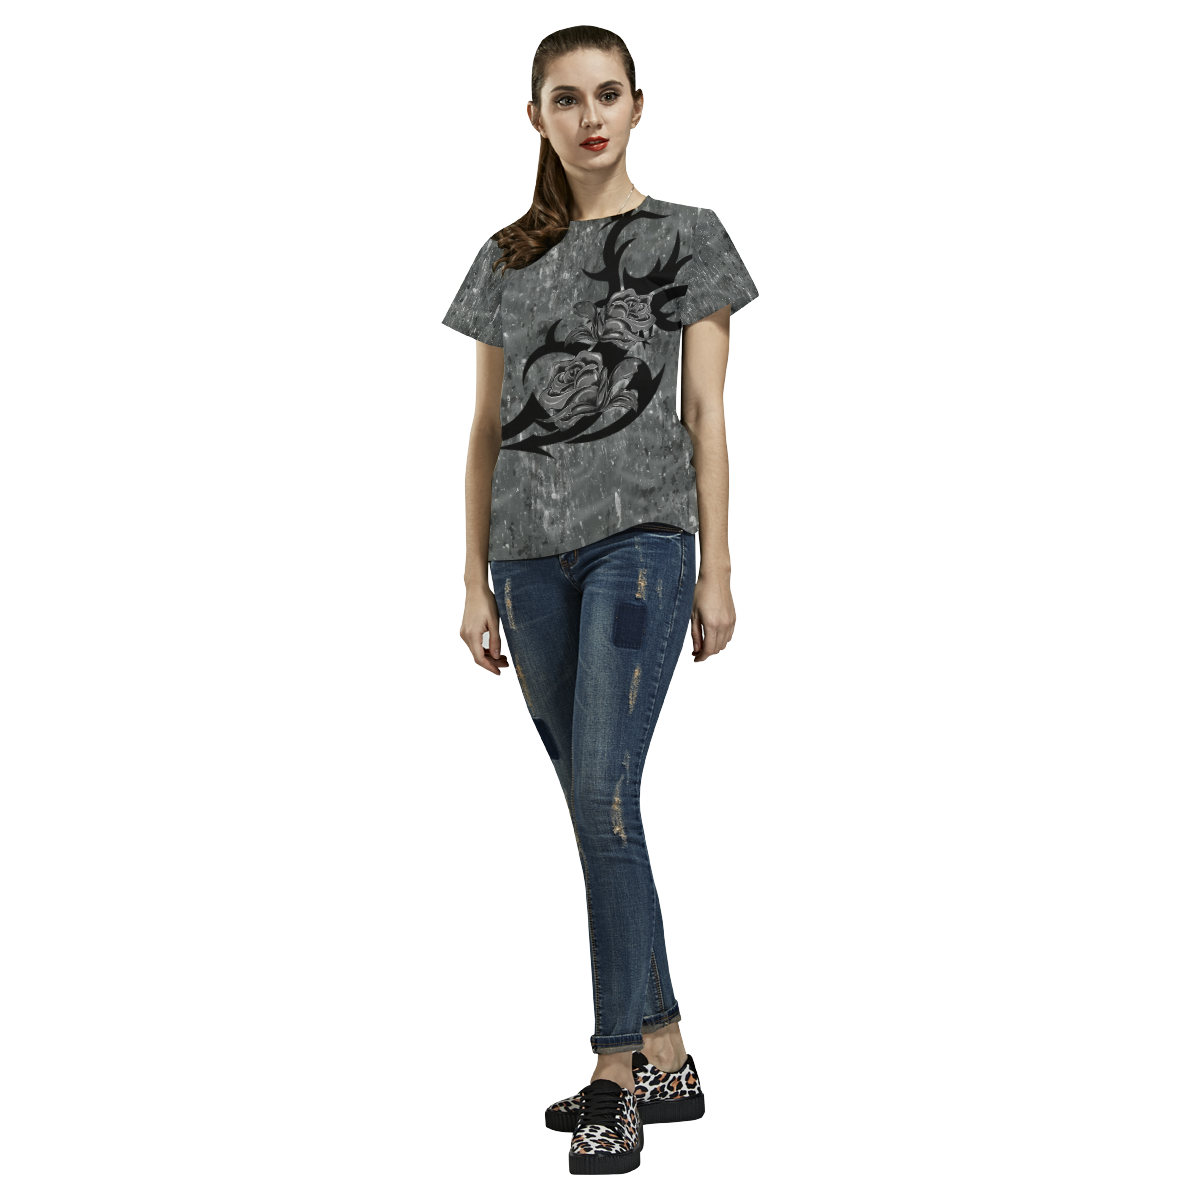 Tribal Roses Grunge Gothic Art Tee All Over Print T-Shirt for Women (USA Size) (Model T40)